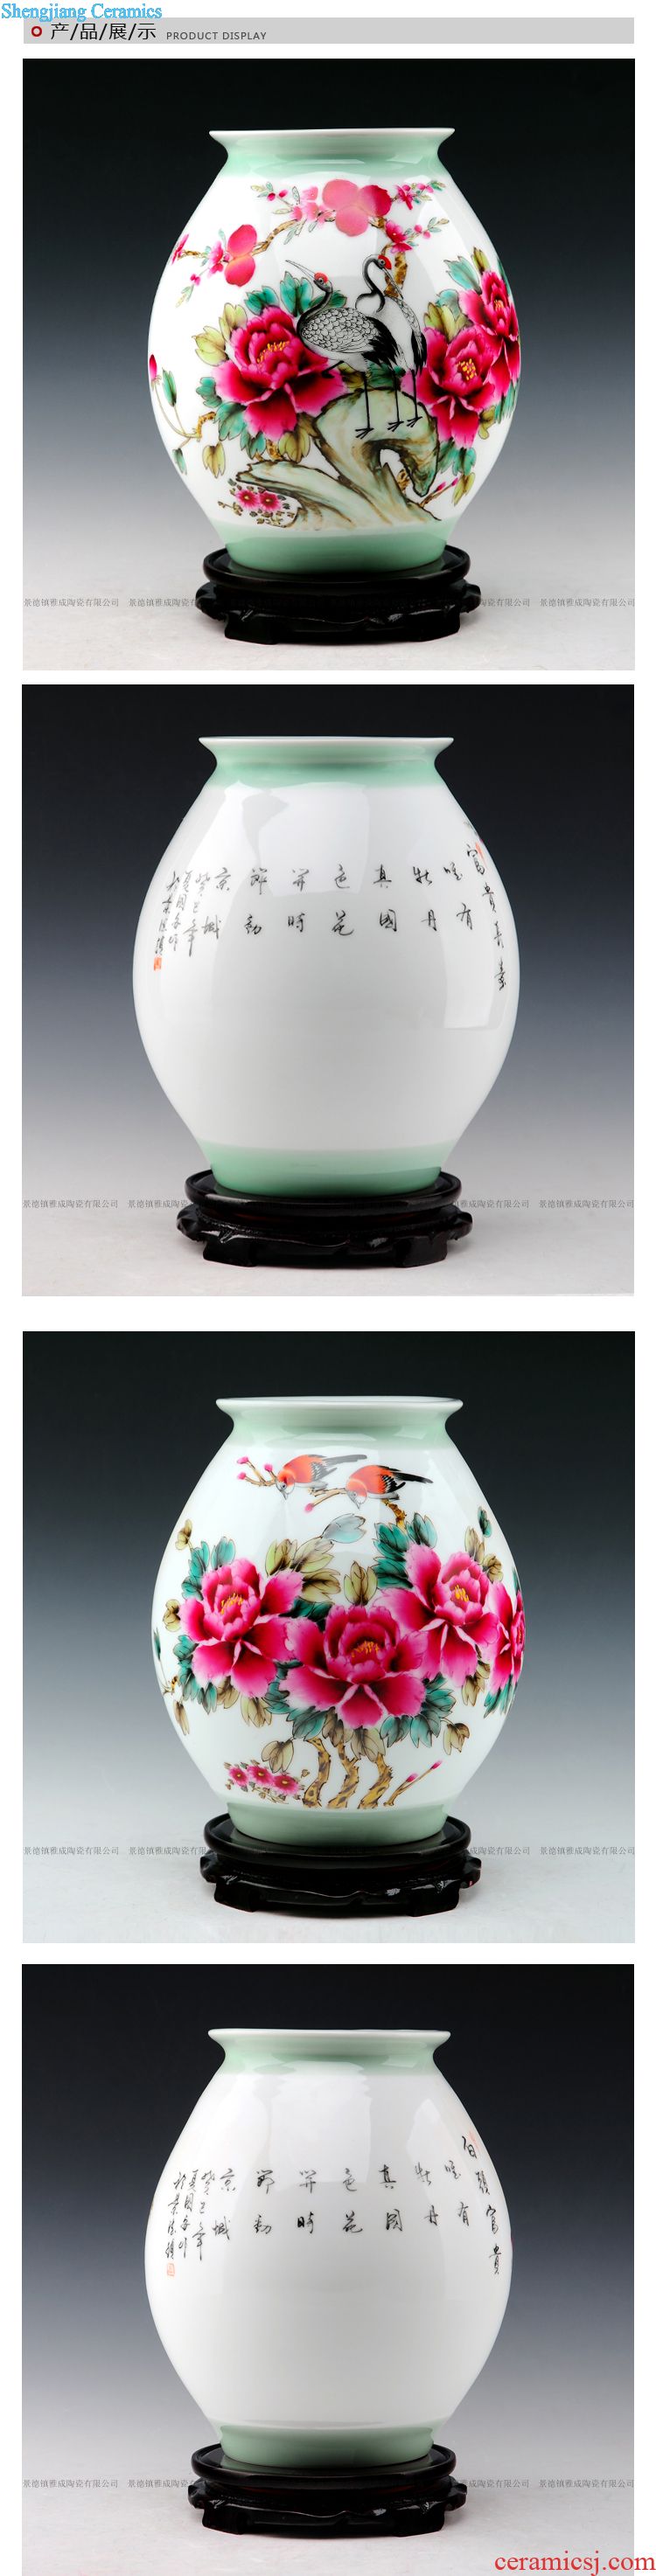 Master of jingdezhen ceramics hand-painted famille rose porcelain vase gall bladder classical household adornment handicraft furnishing articles